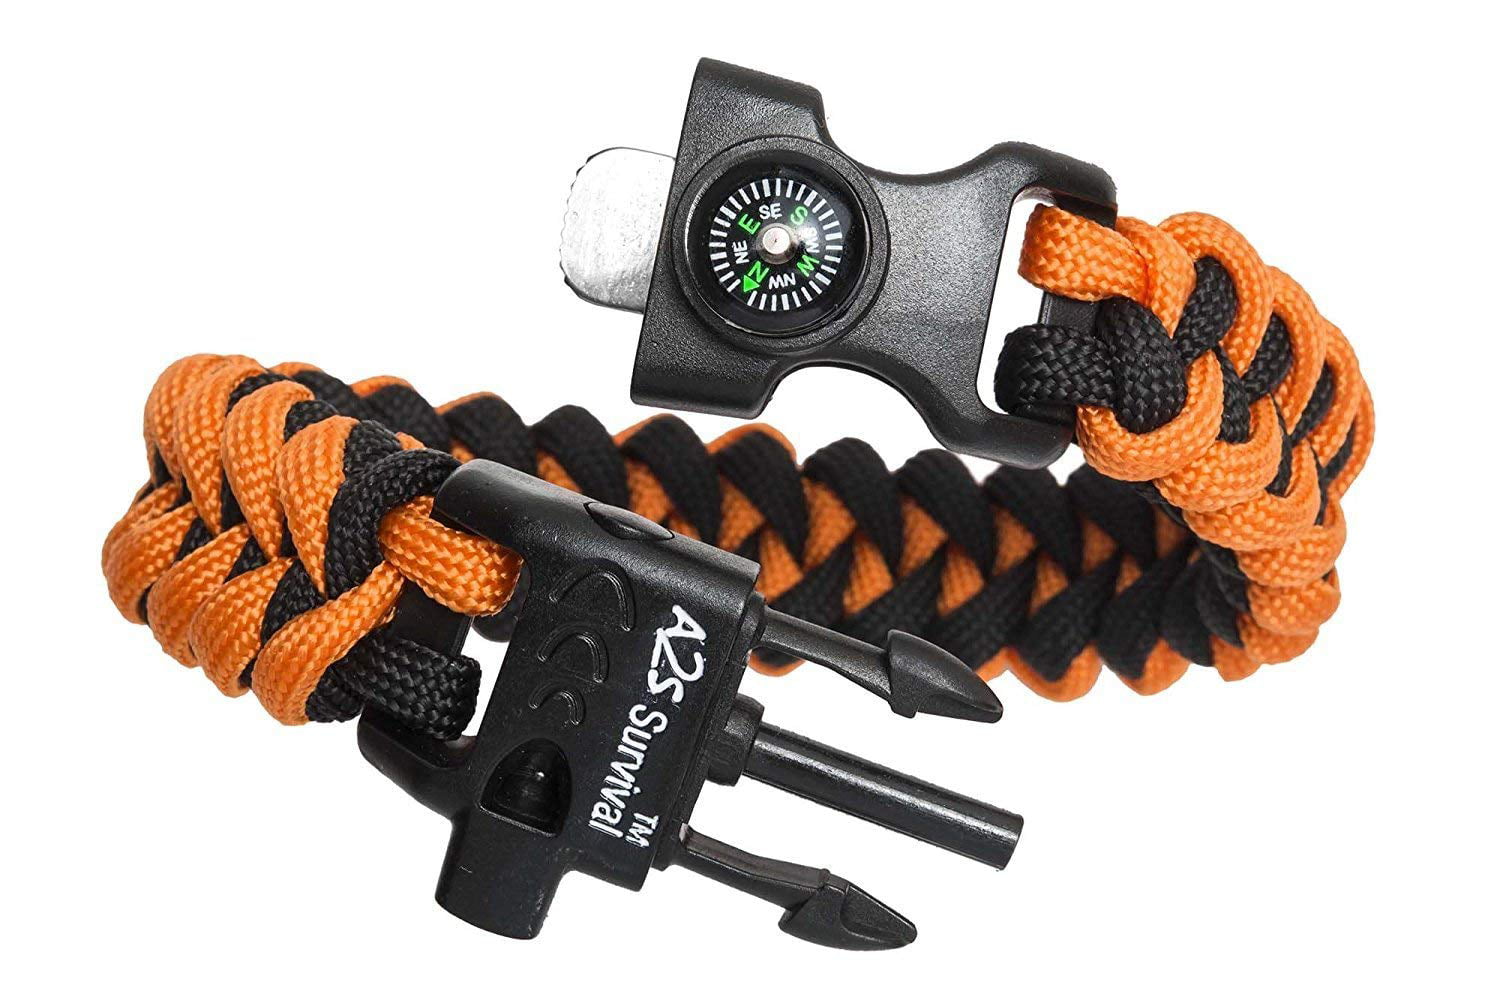 A2S Paracord Bracelet K2-Peak - Survival Gear Kit with Compass, Starter, Knife & Whistle (Black/Orange 9") - Walmart.com